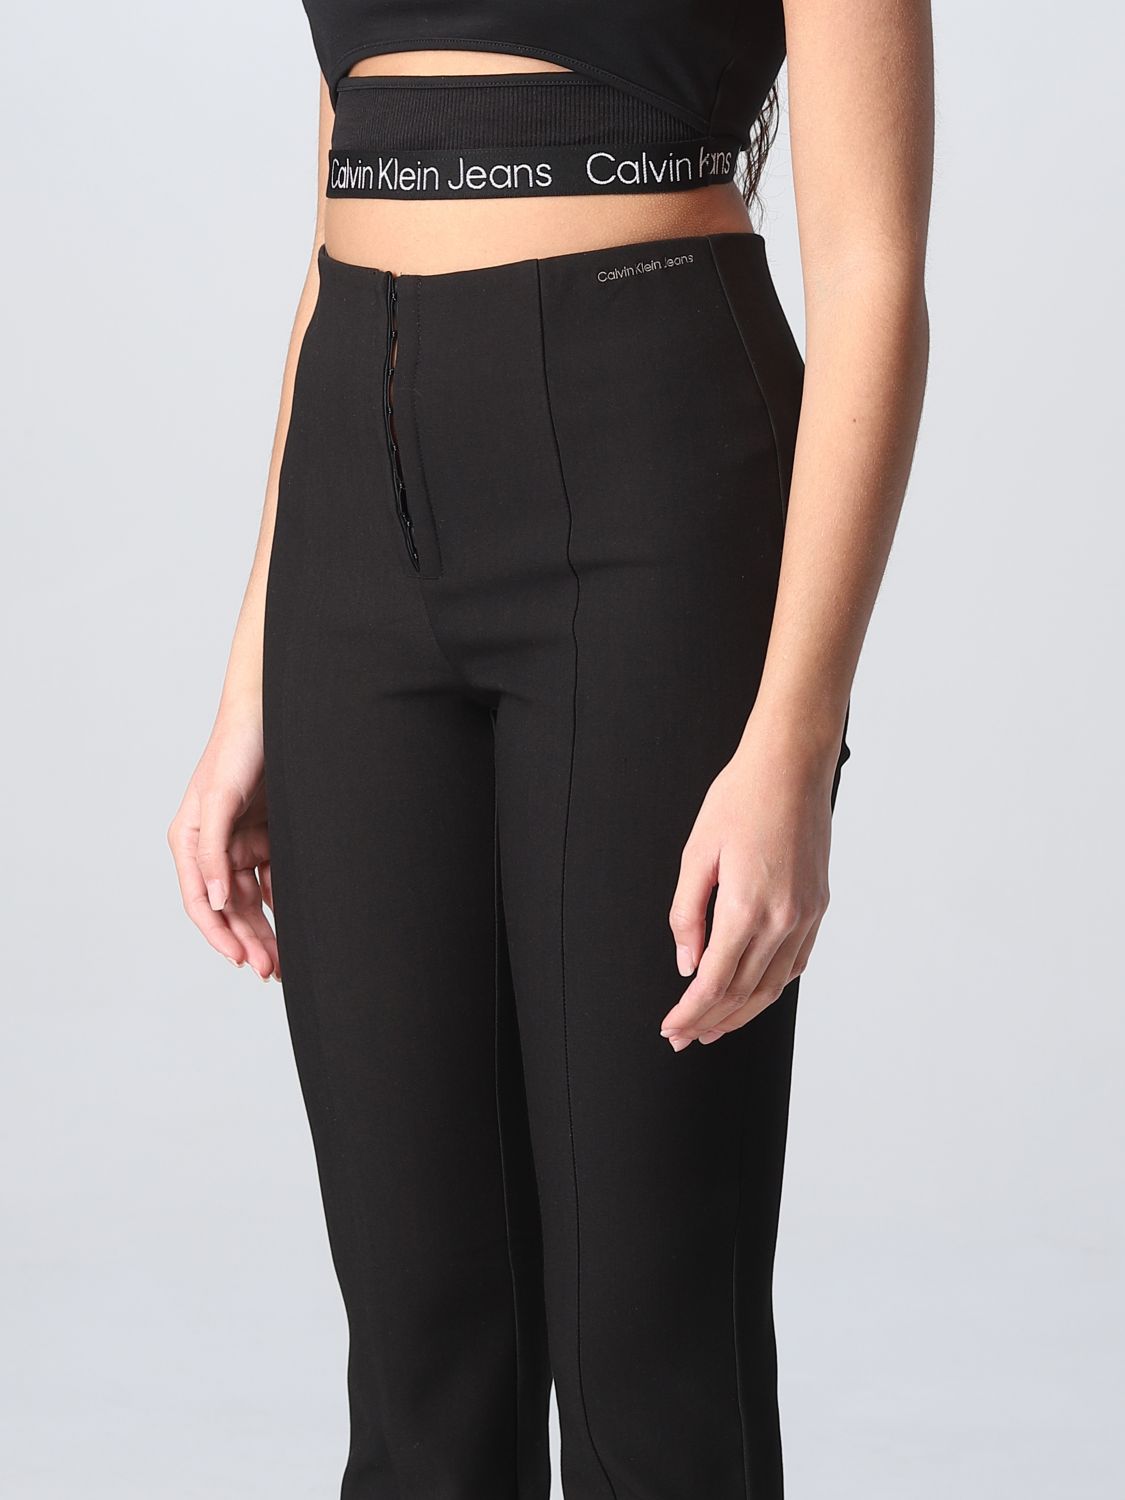 CALVIN KLEIN JEANS: pants for woman - Black | Calvin Klein Jeans pants  J20J220529 online on 